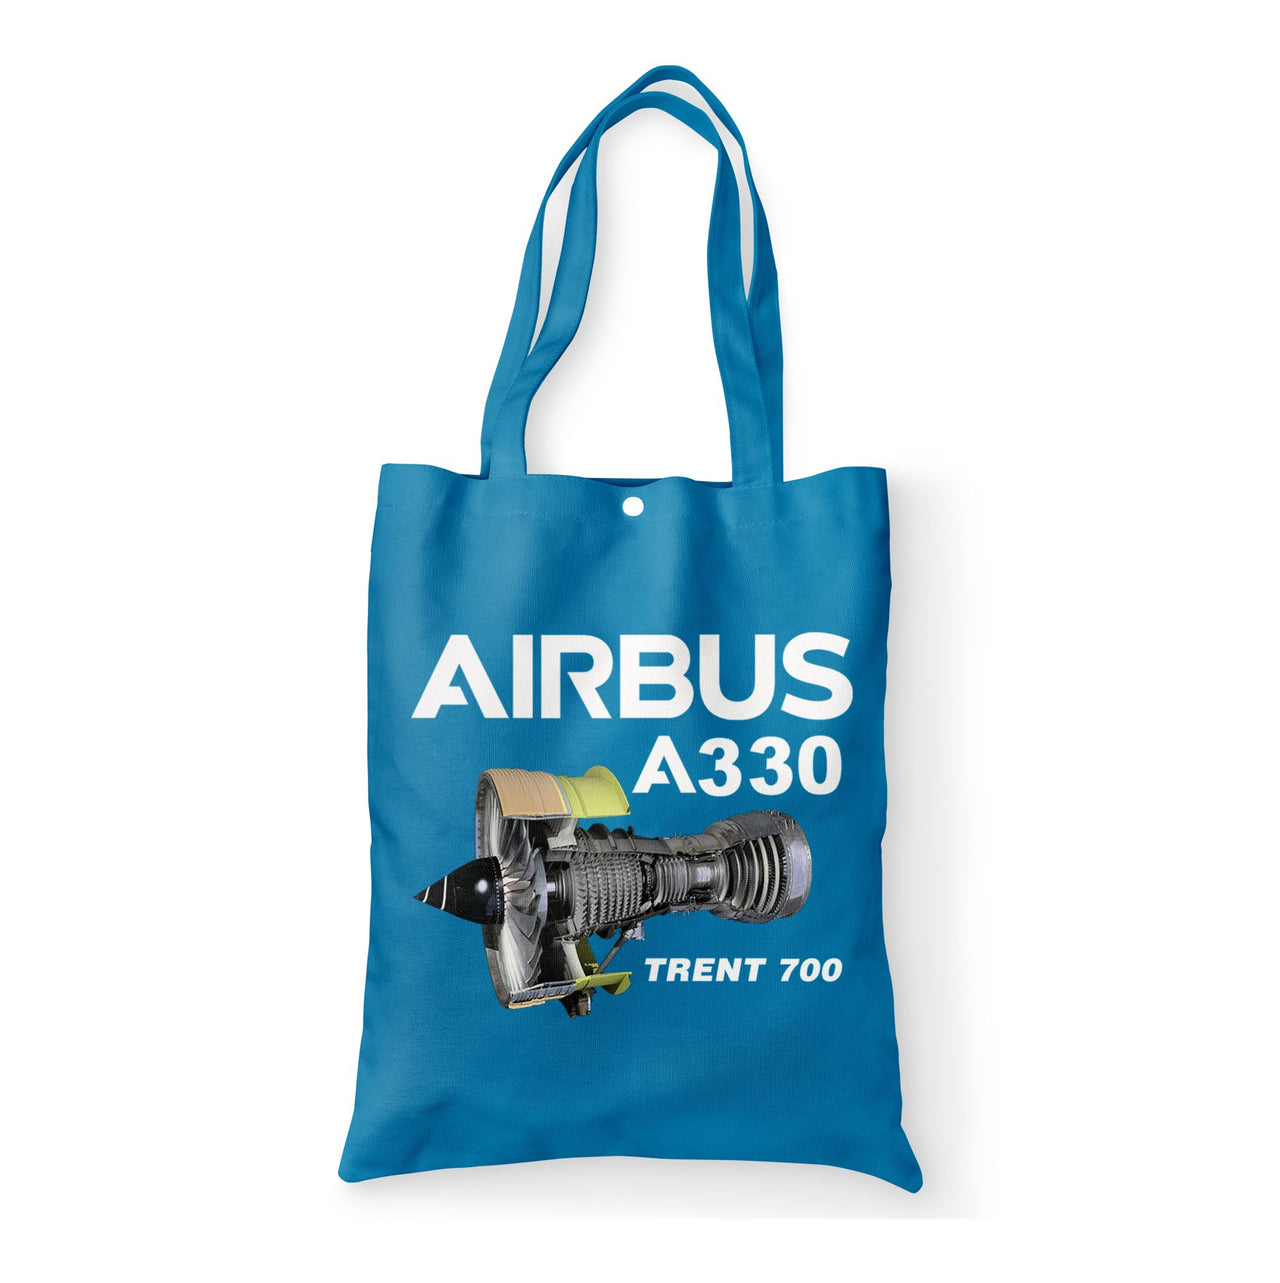 Airbus A330 & Trent 700 Engine Designed Tote Bags